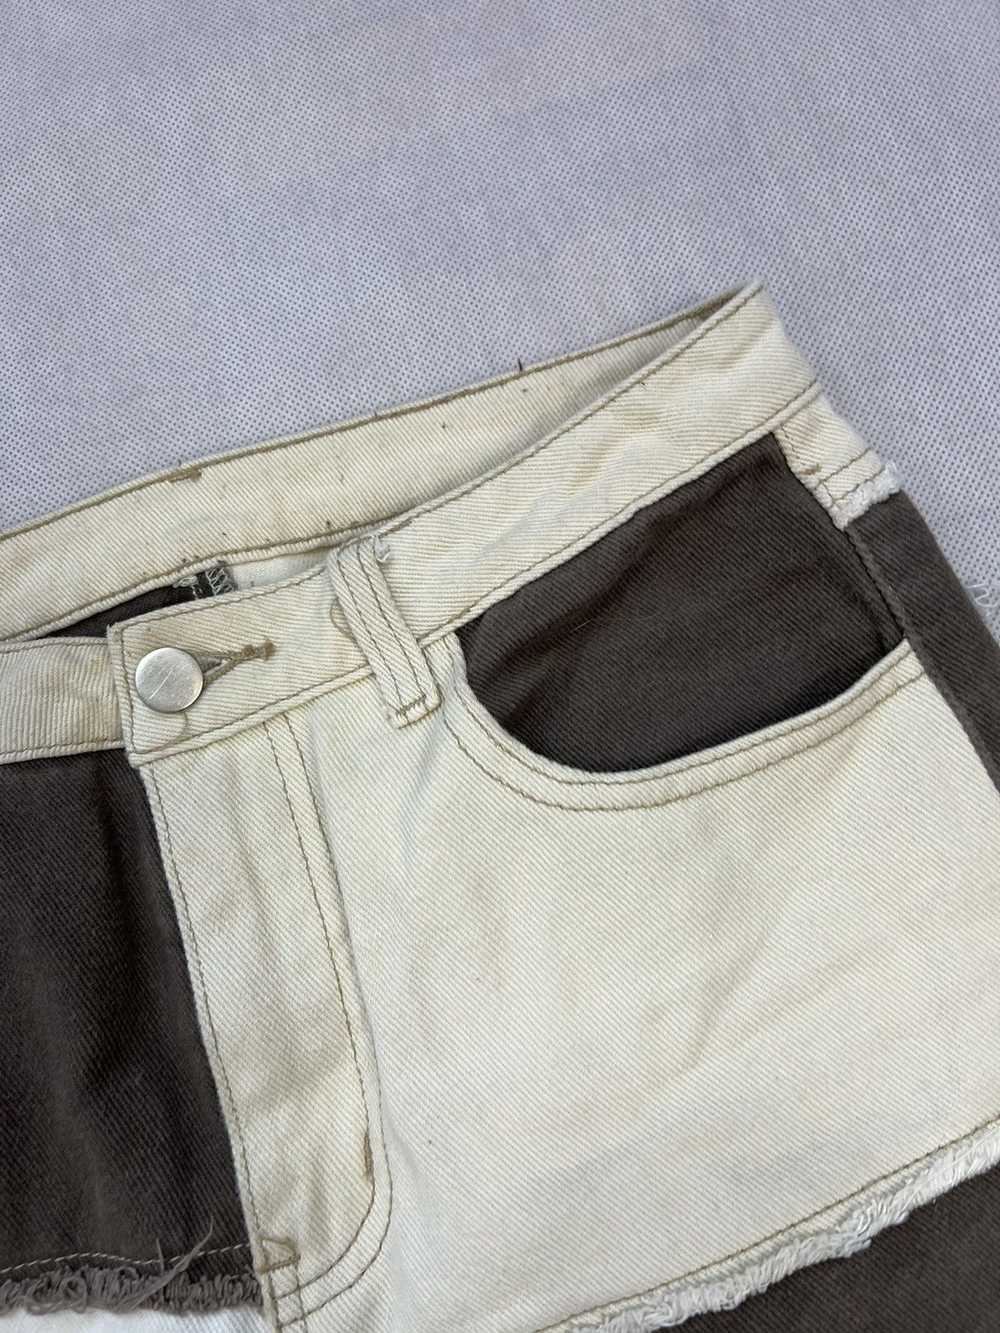 Designer × Made In Usa × Vintage Great Pants Patc… - image 4